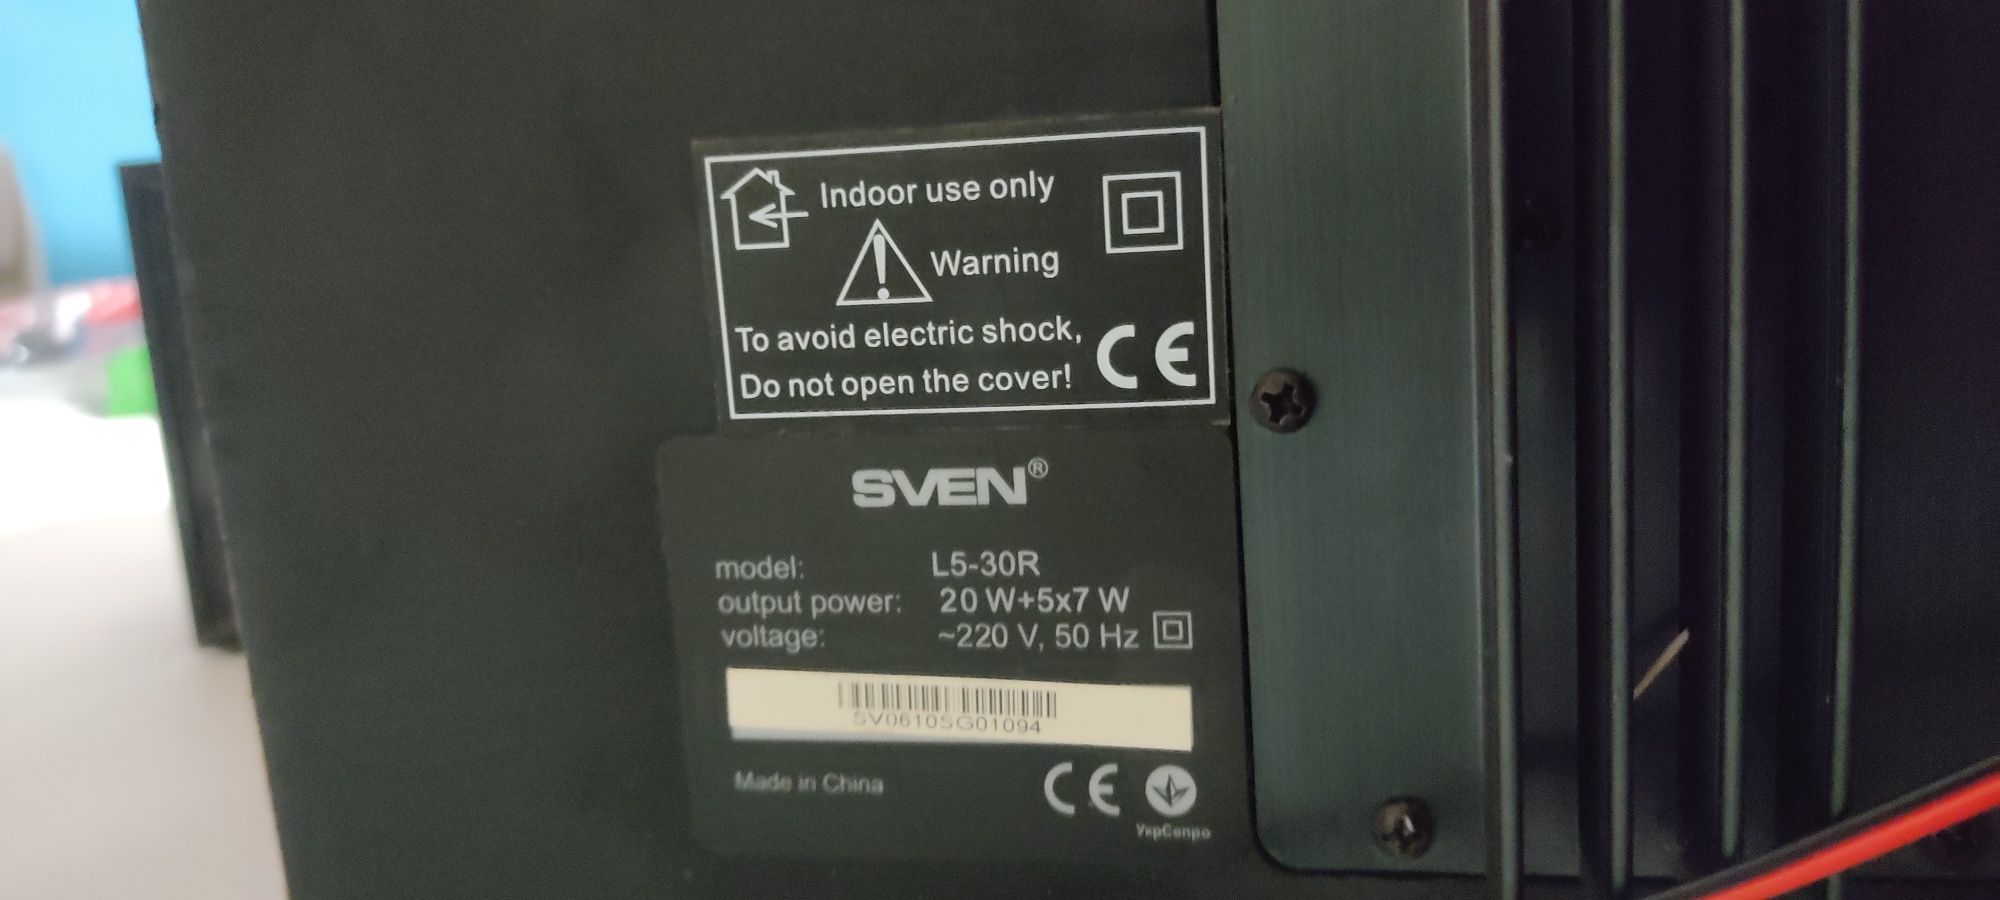 SVEN® model: L5-30R
modelm30R

output power: 20W